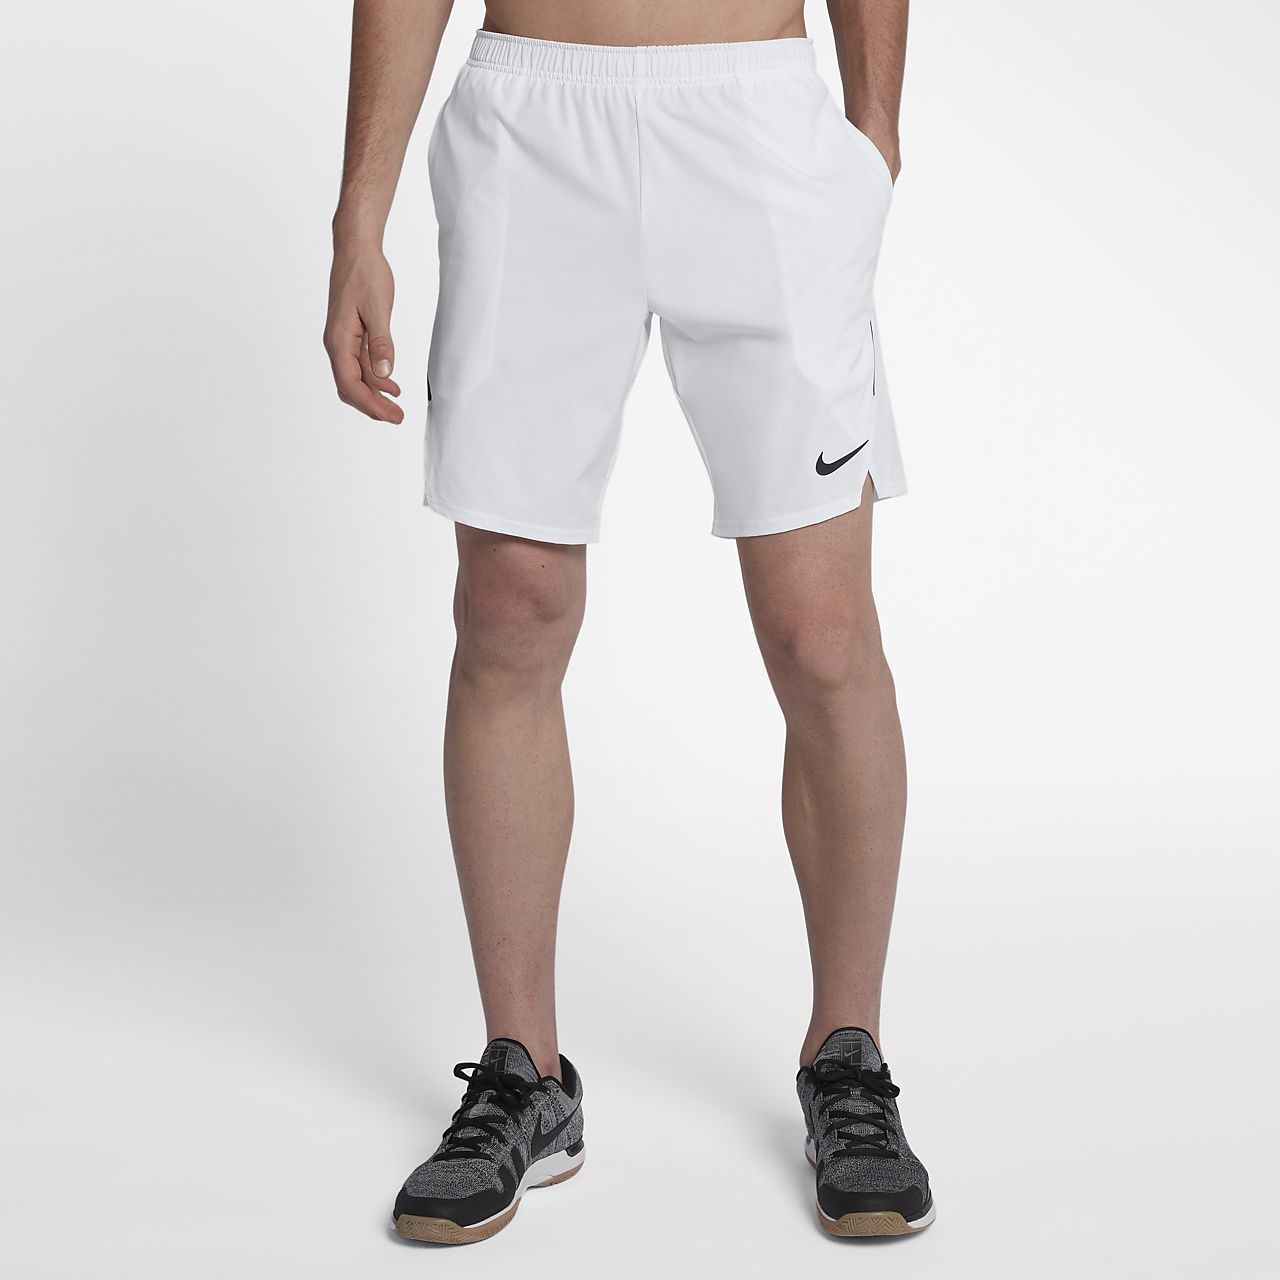 nike flex court shorts